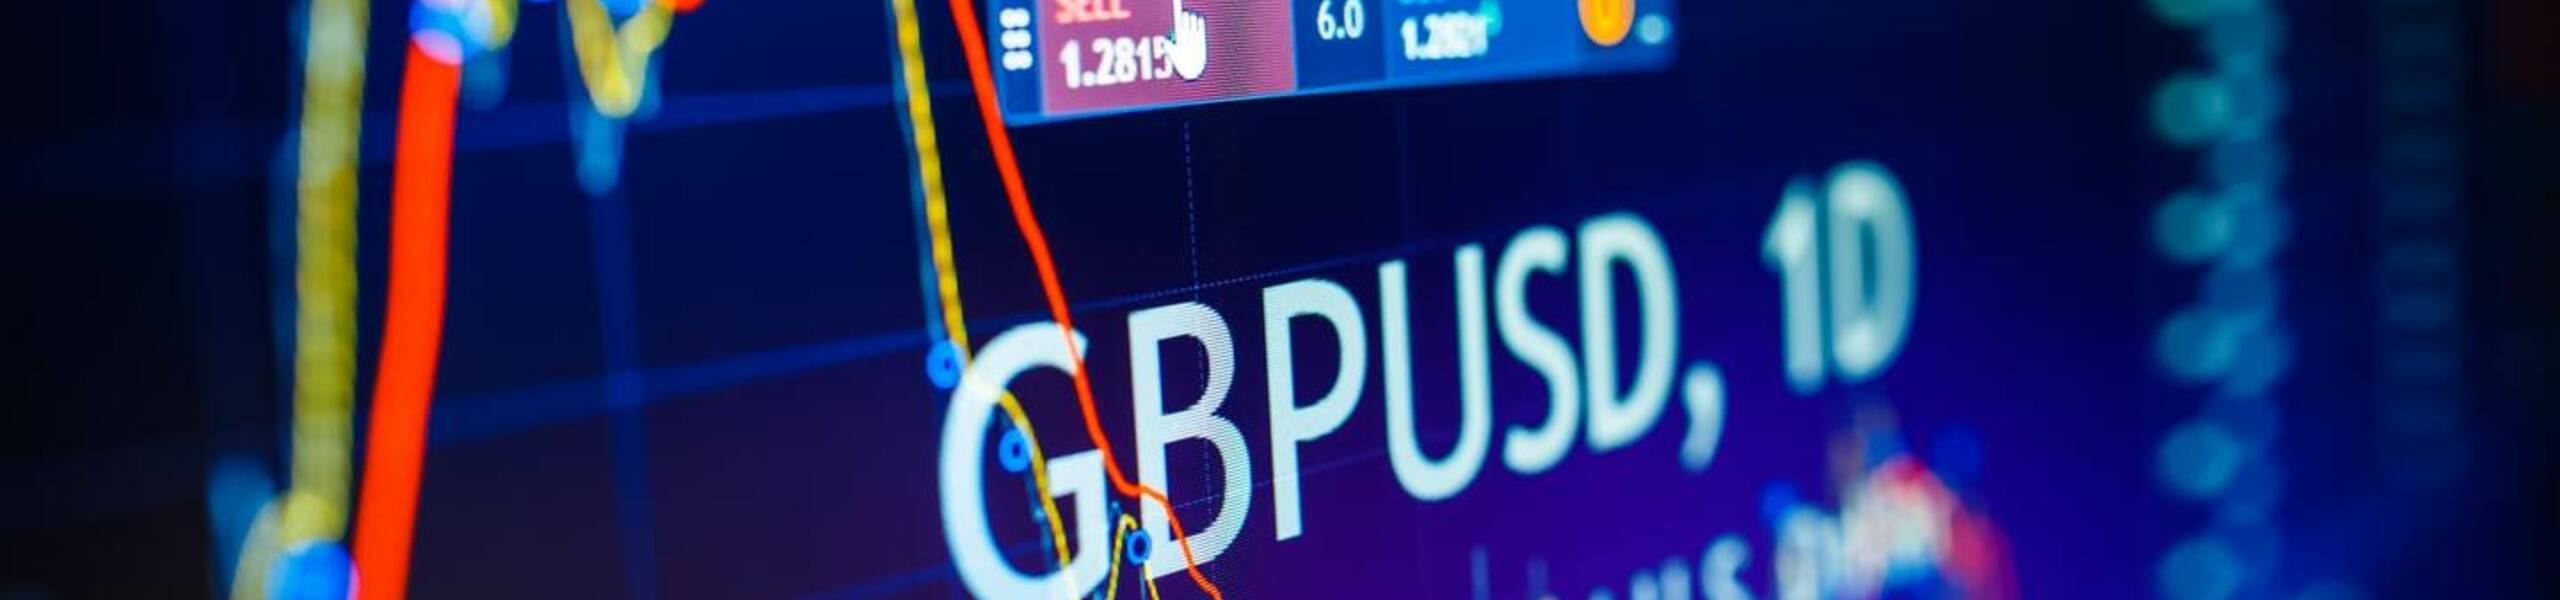 GBPUSD Konsolidasi Di Tengah Indeks Dolar AS Lanjutkan Penurunan